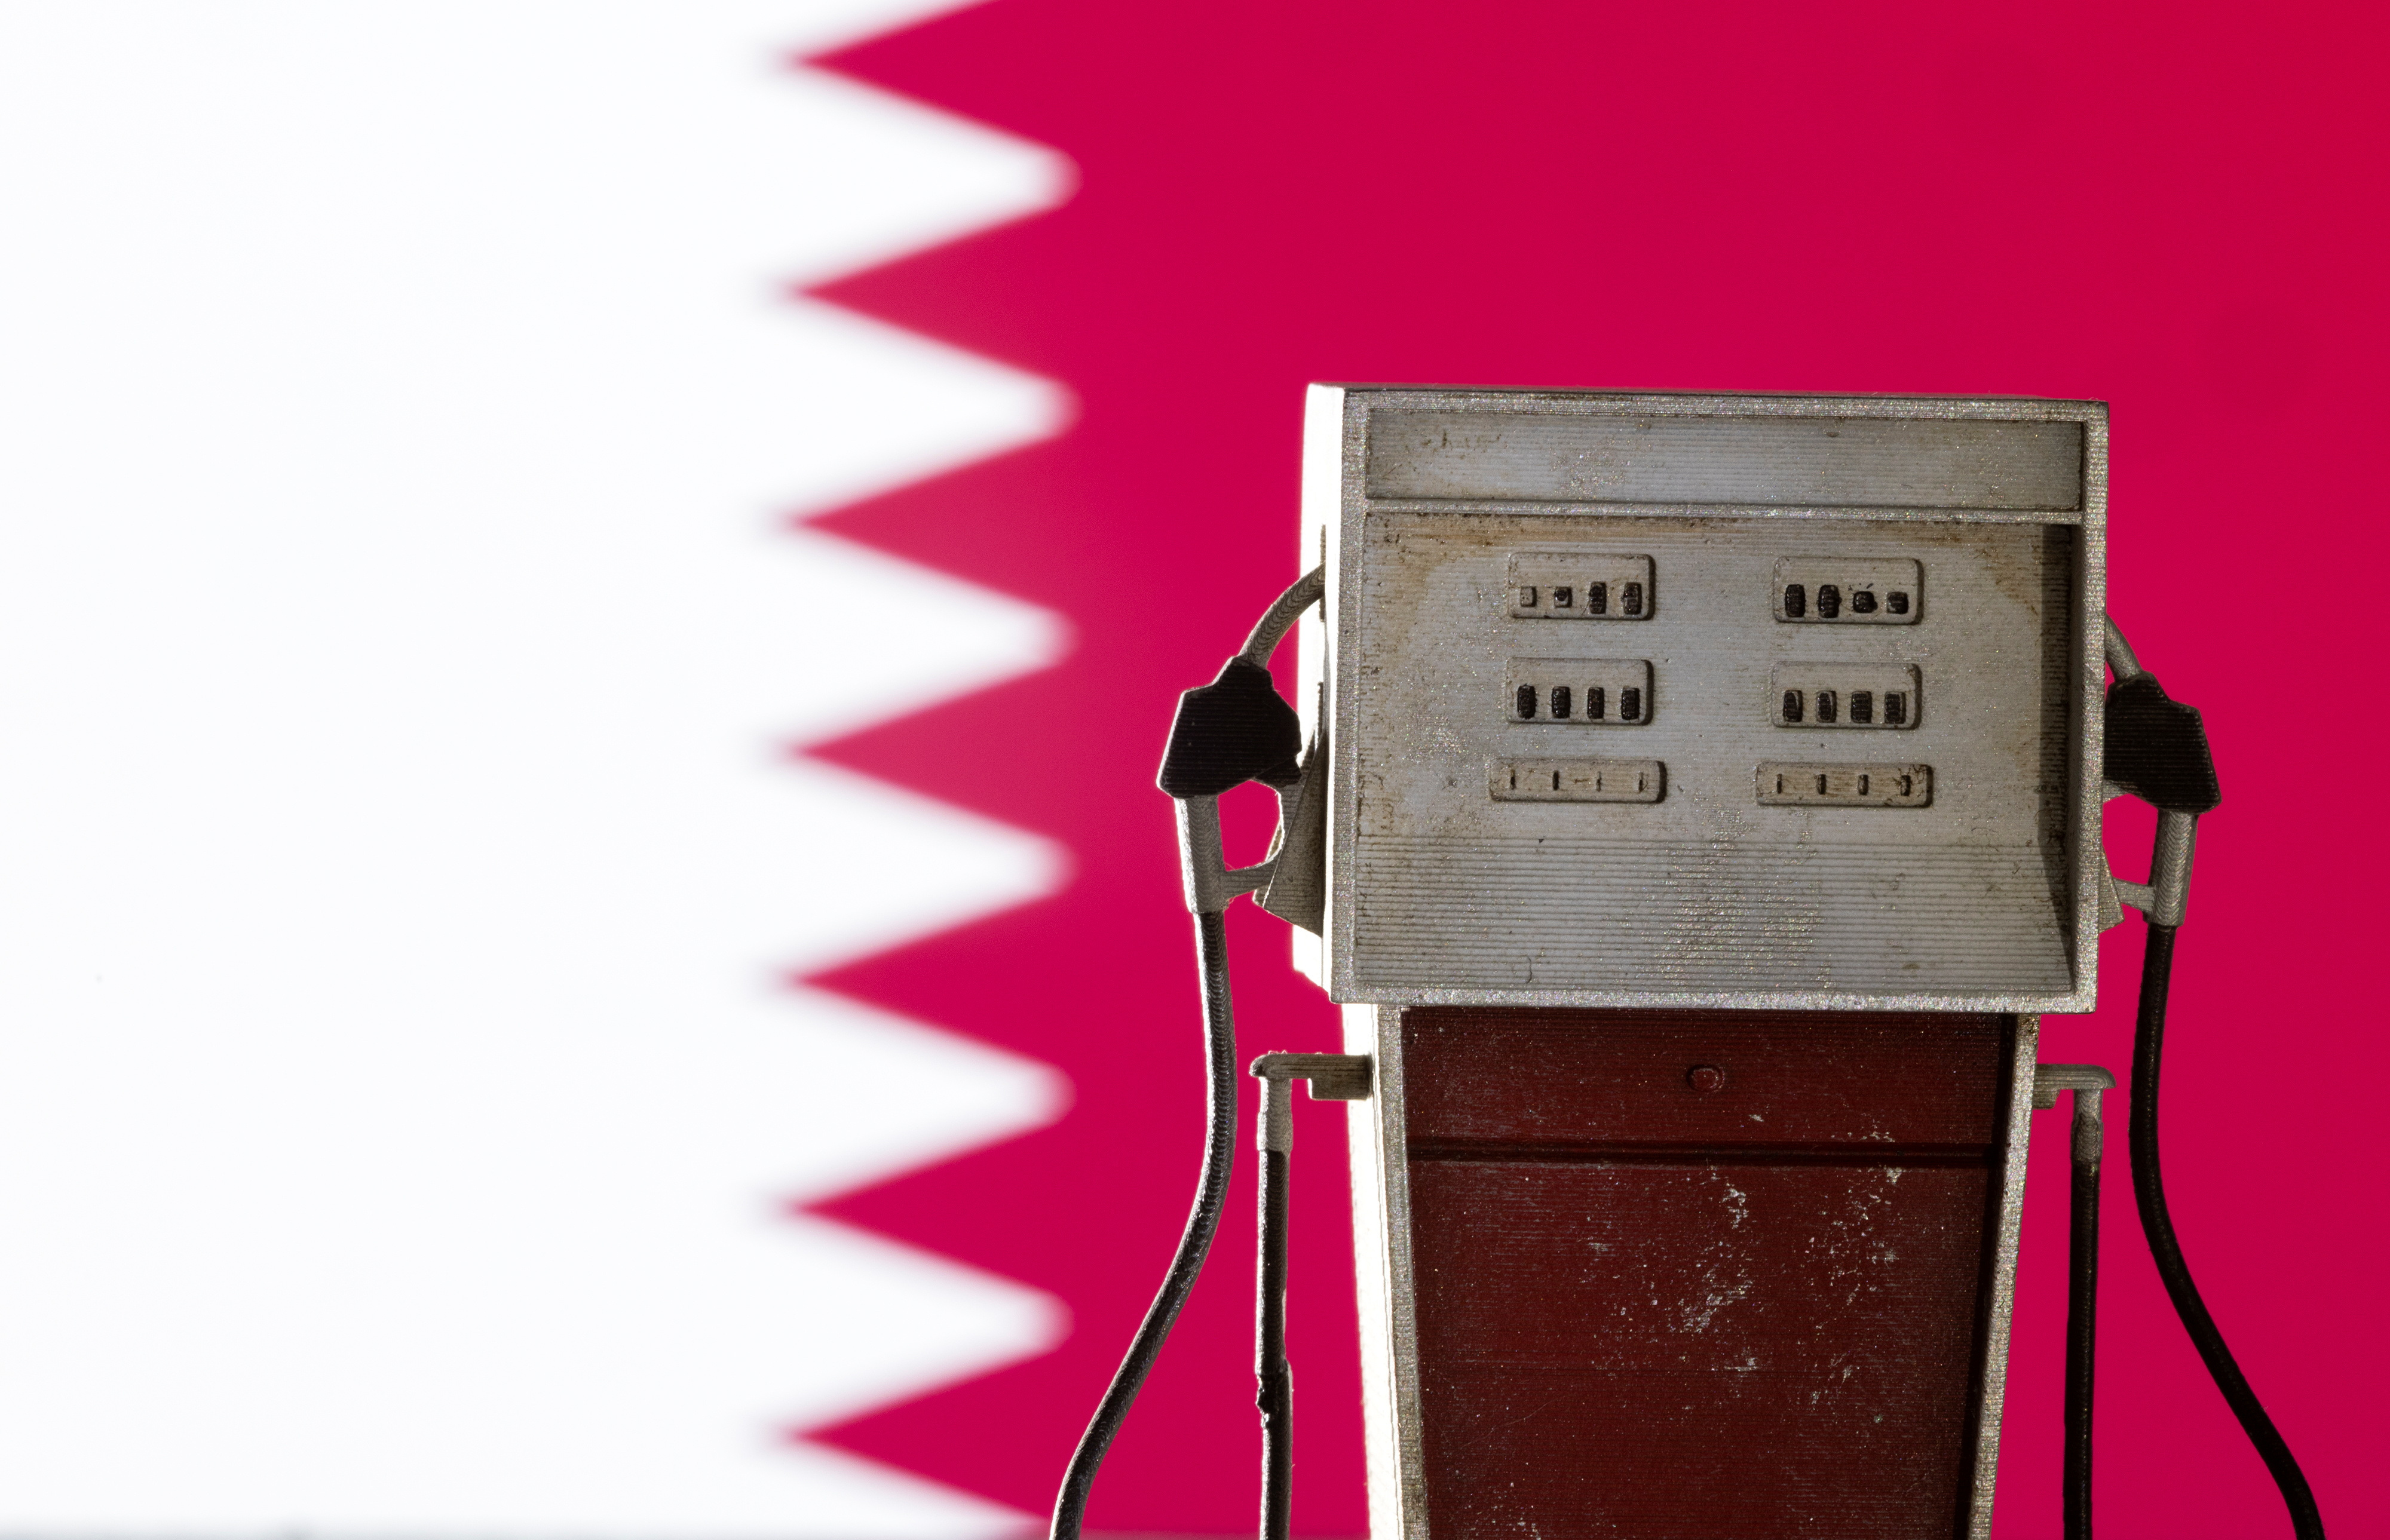 Illustration shows model of petrol pump and Qatar flag colors